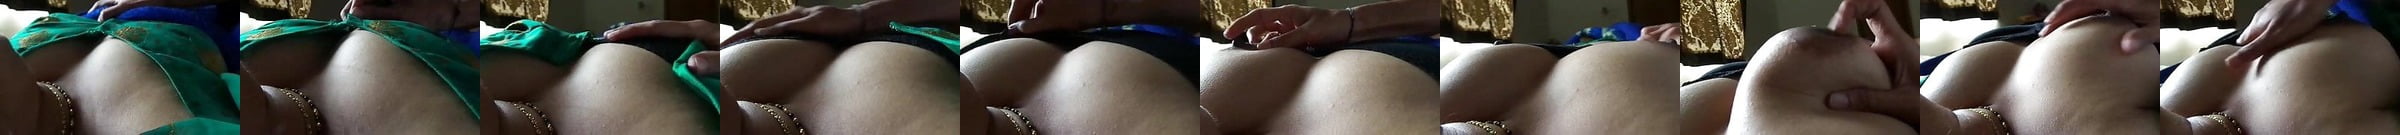 Boobs Fondled Porn Videos Xhamster